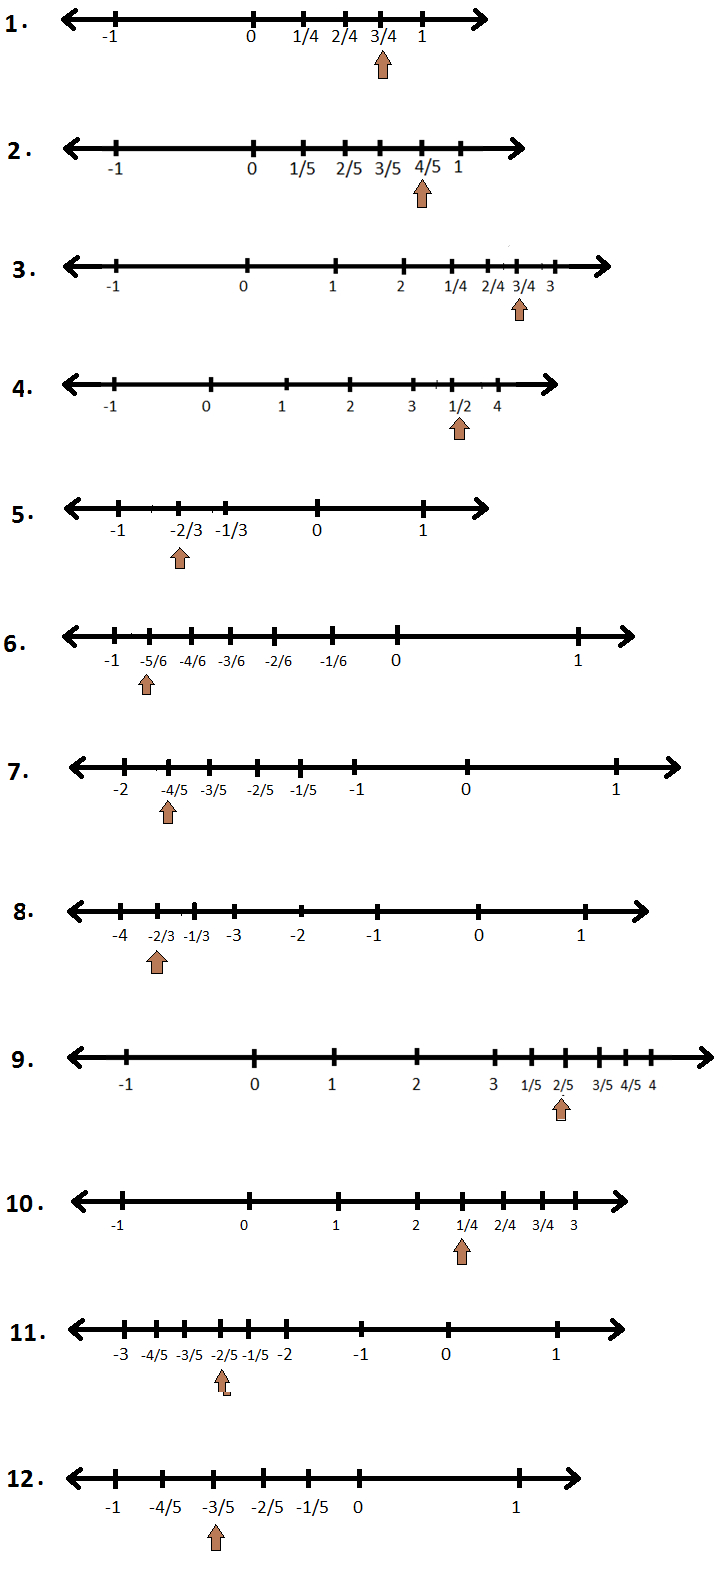 Worksheet On Representation Of Rational Numbers On The Number Line Within Rational Numbers Worksheet